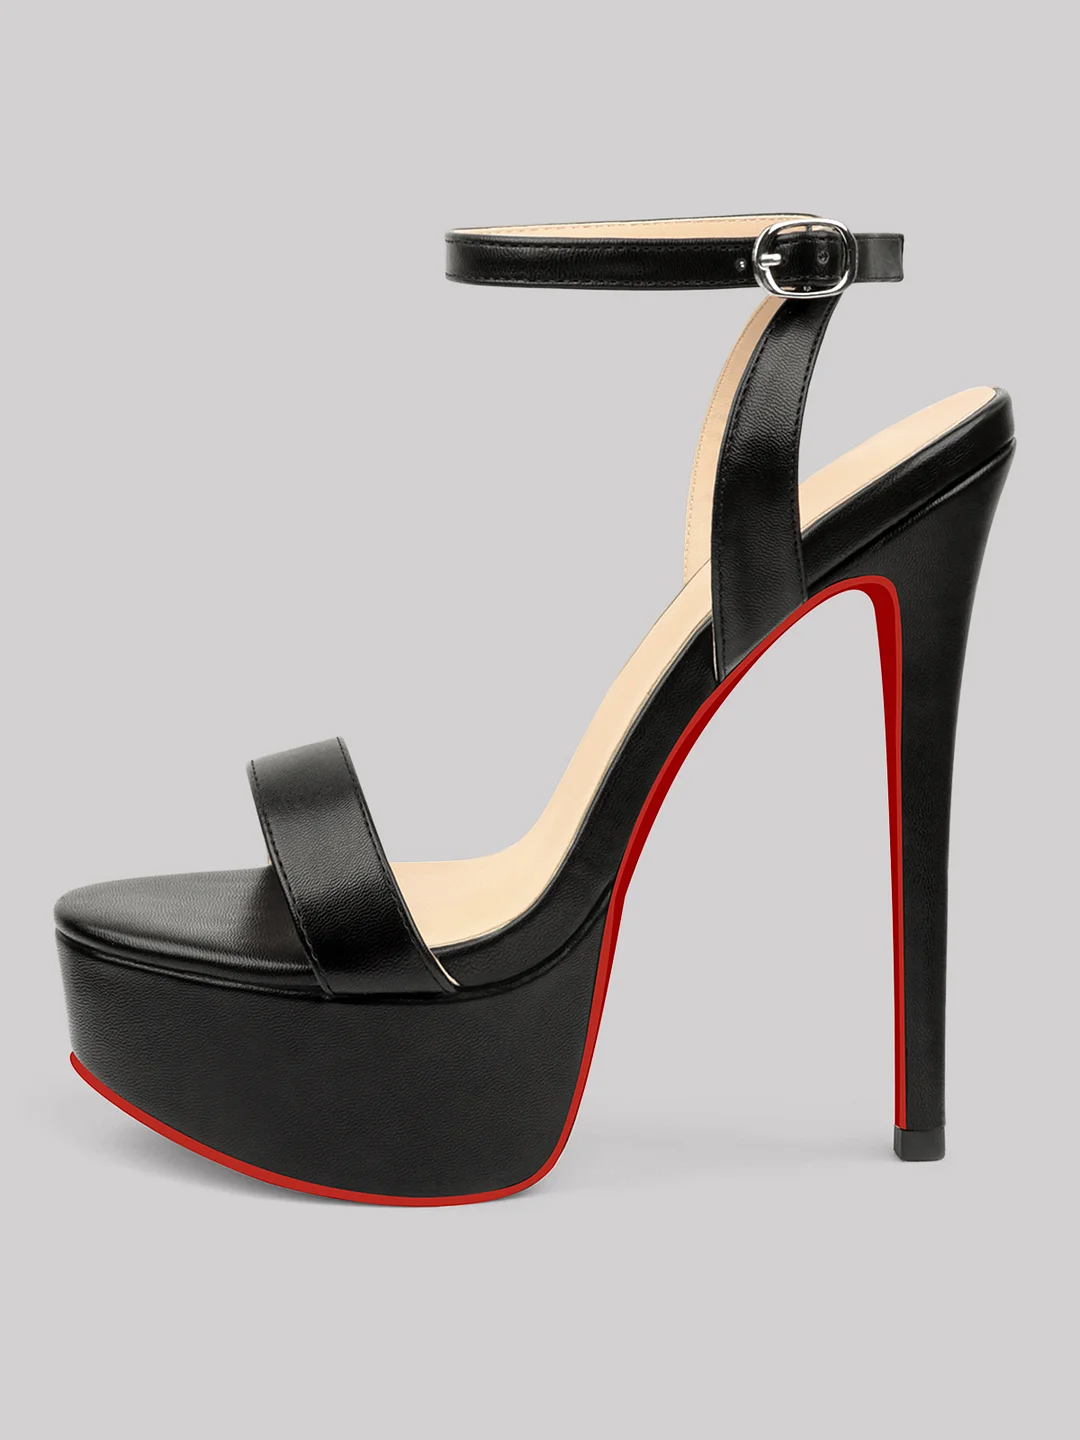 150mm Women's Open Toe Platform Ankle Strap High Heel Matte Sandals Red Bottom Shoes